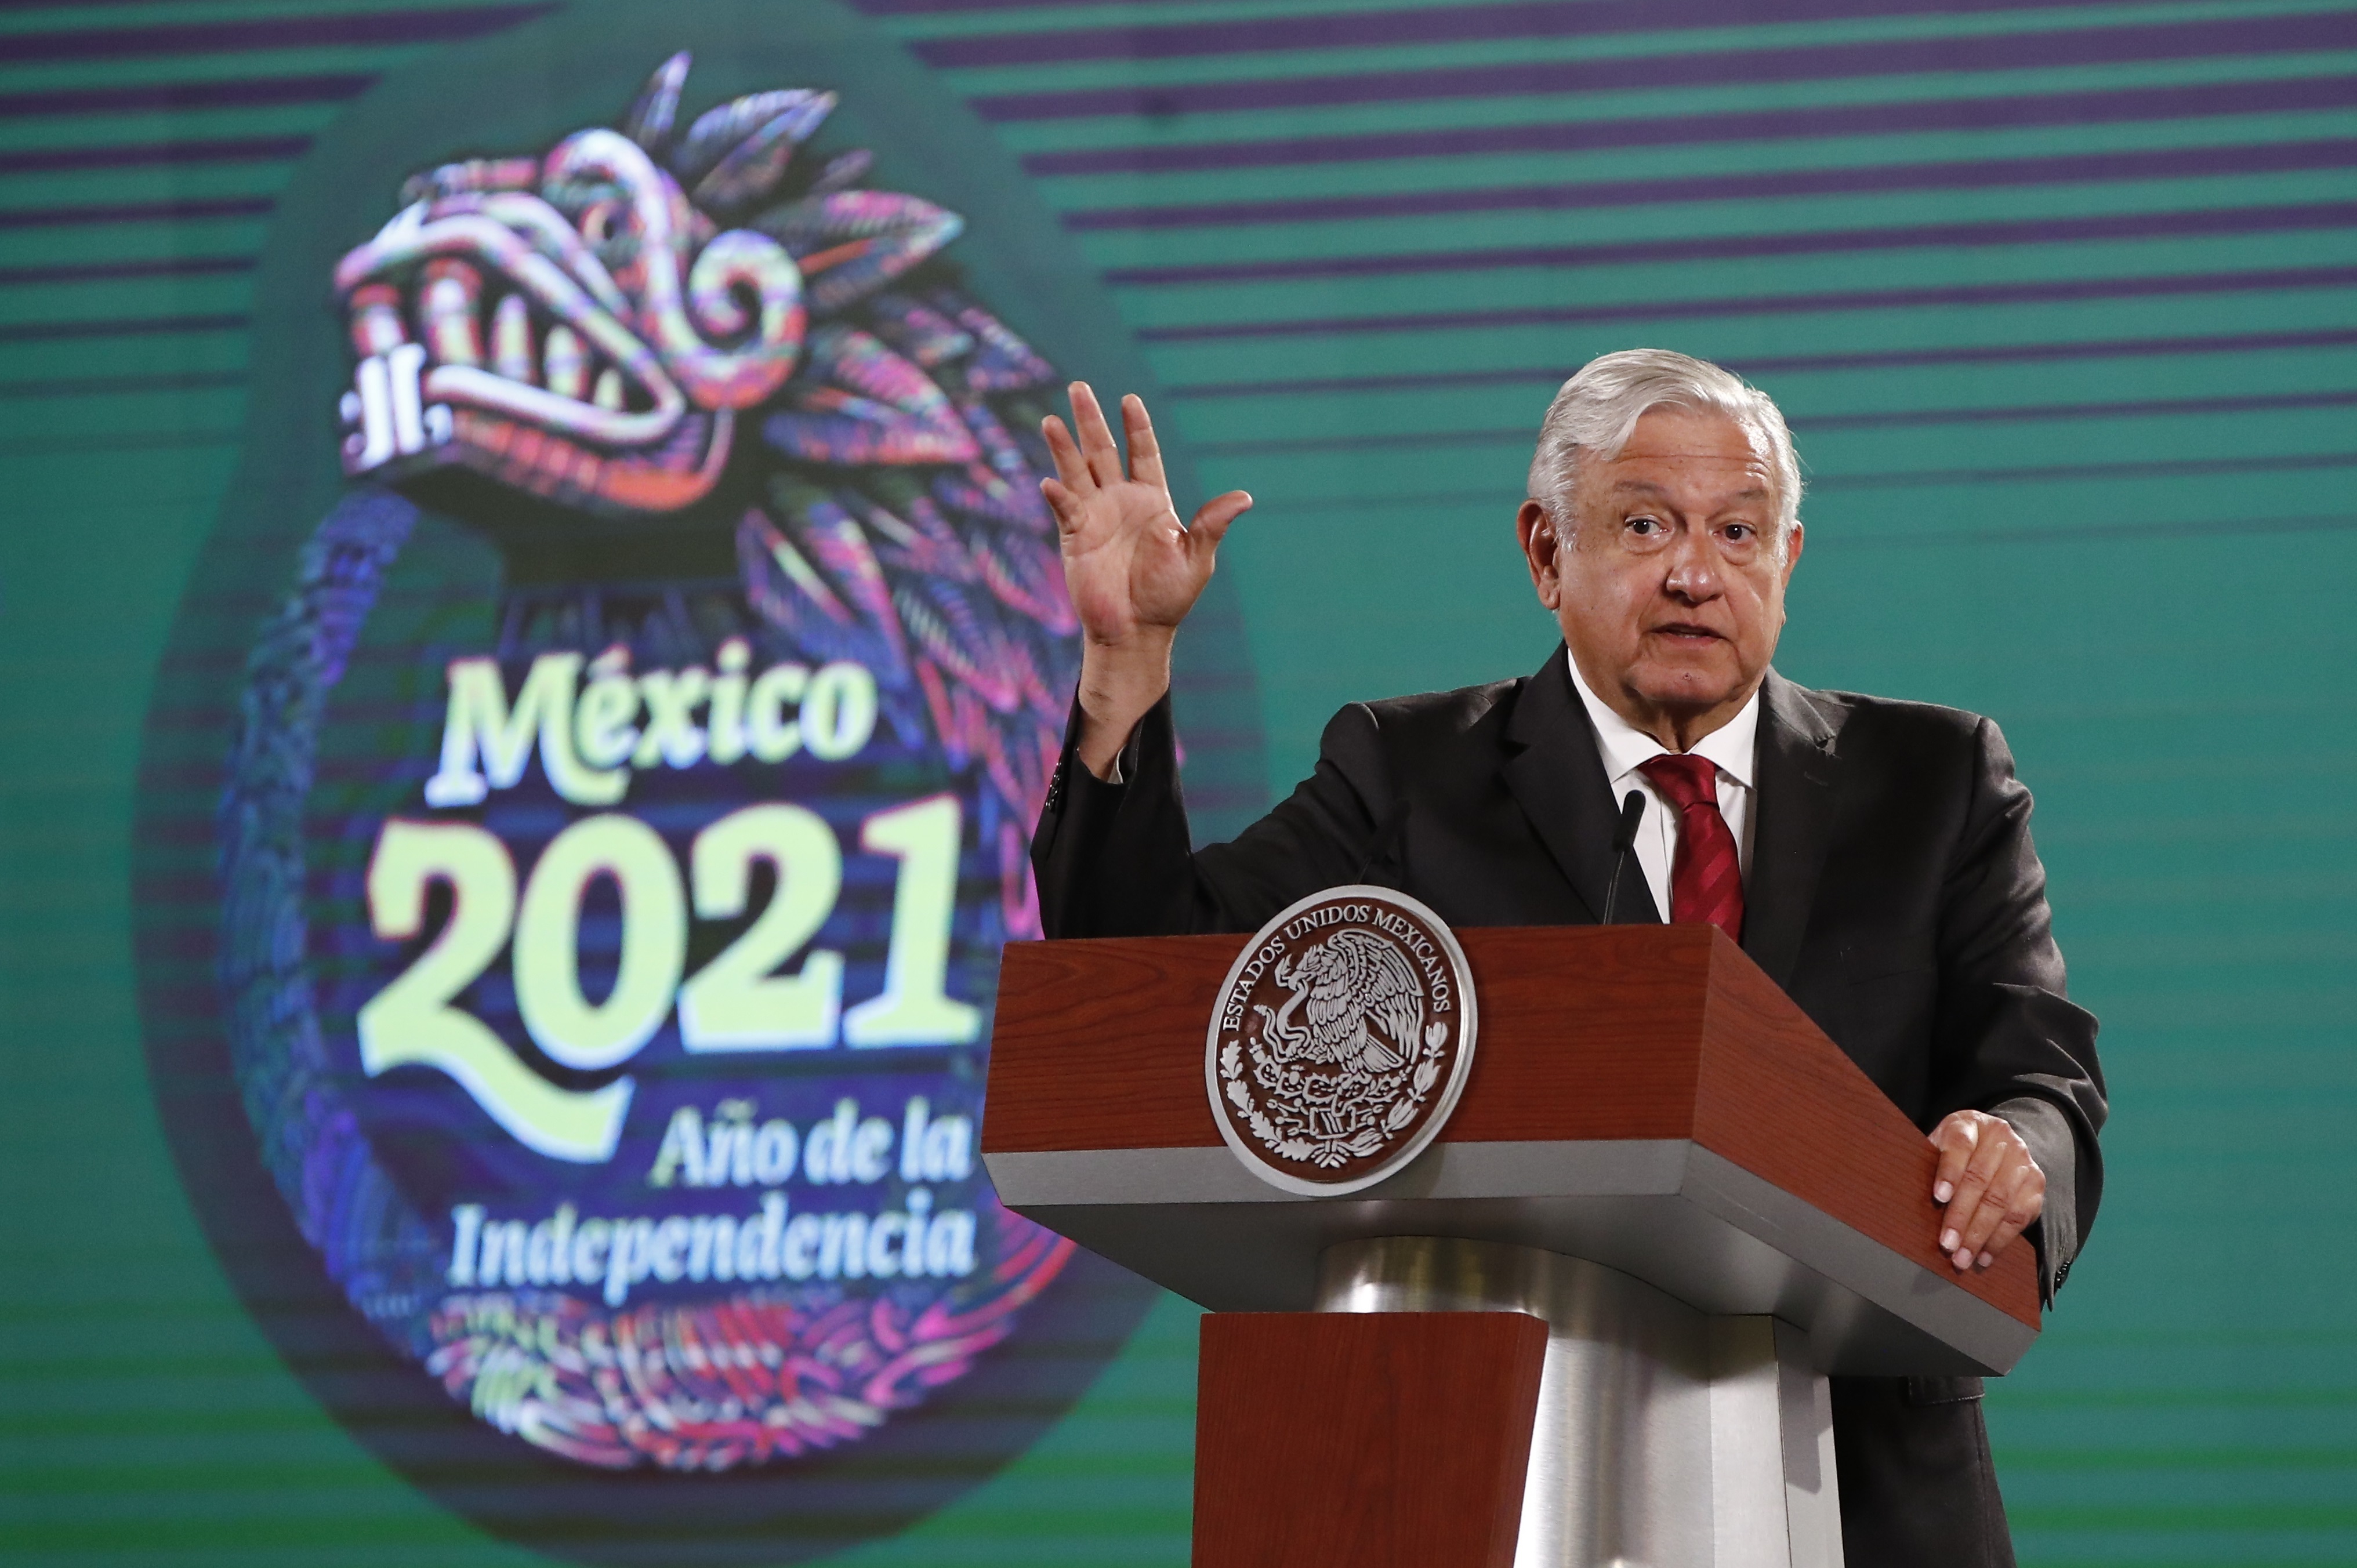 El presidente de México, Andrés Manuel López Obrador. Bachelet pidió al Gobierno mexicano que se abstenga de utilizar un lenguaje que descalifique a aquellos que critican a las autoridades. (EFE/ José Méndez)
